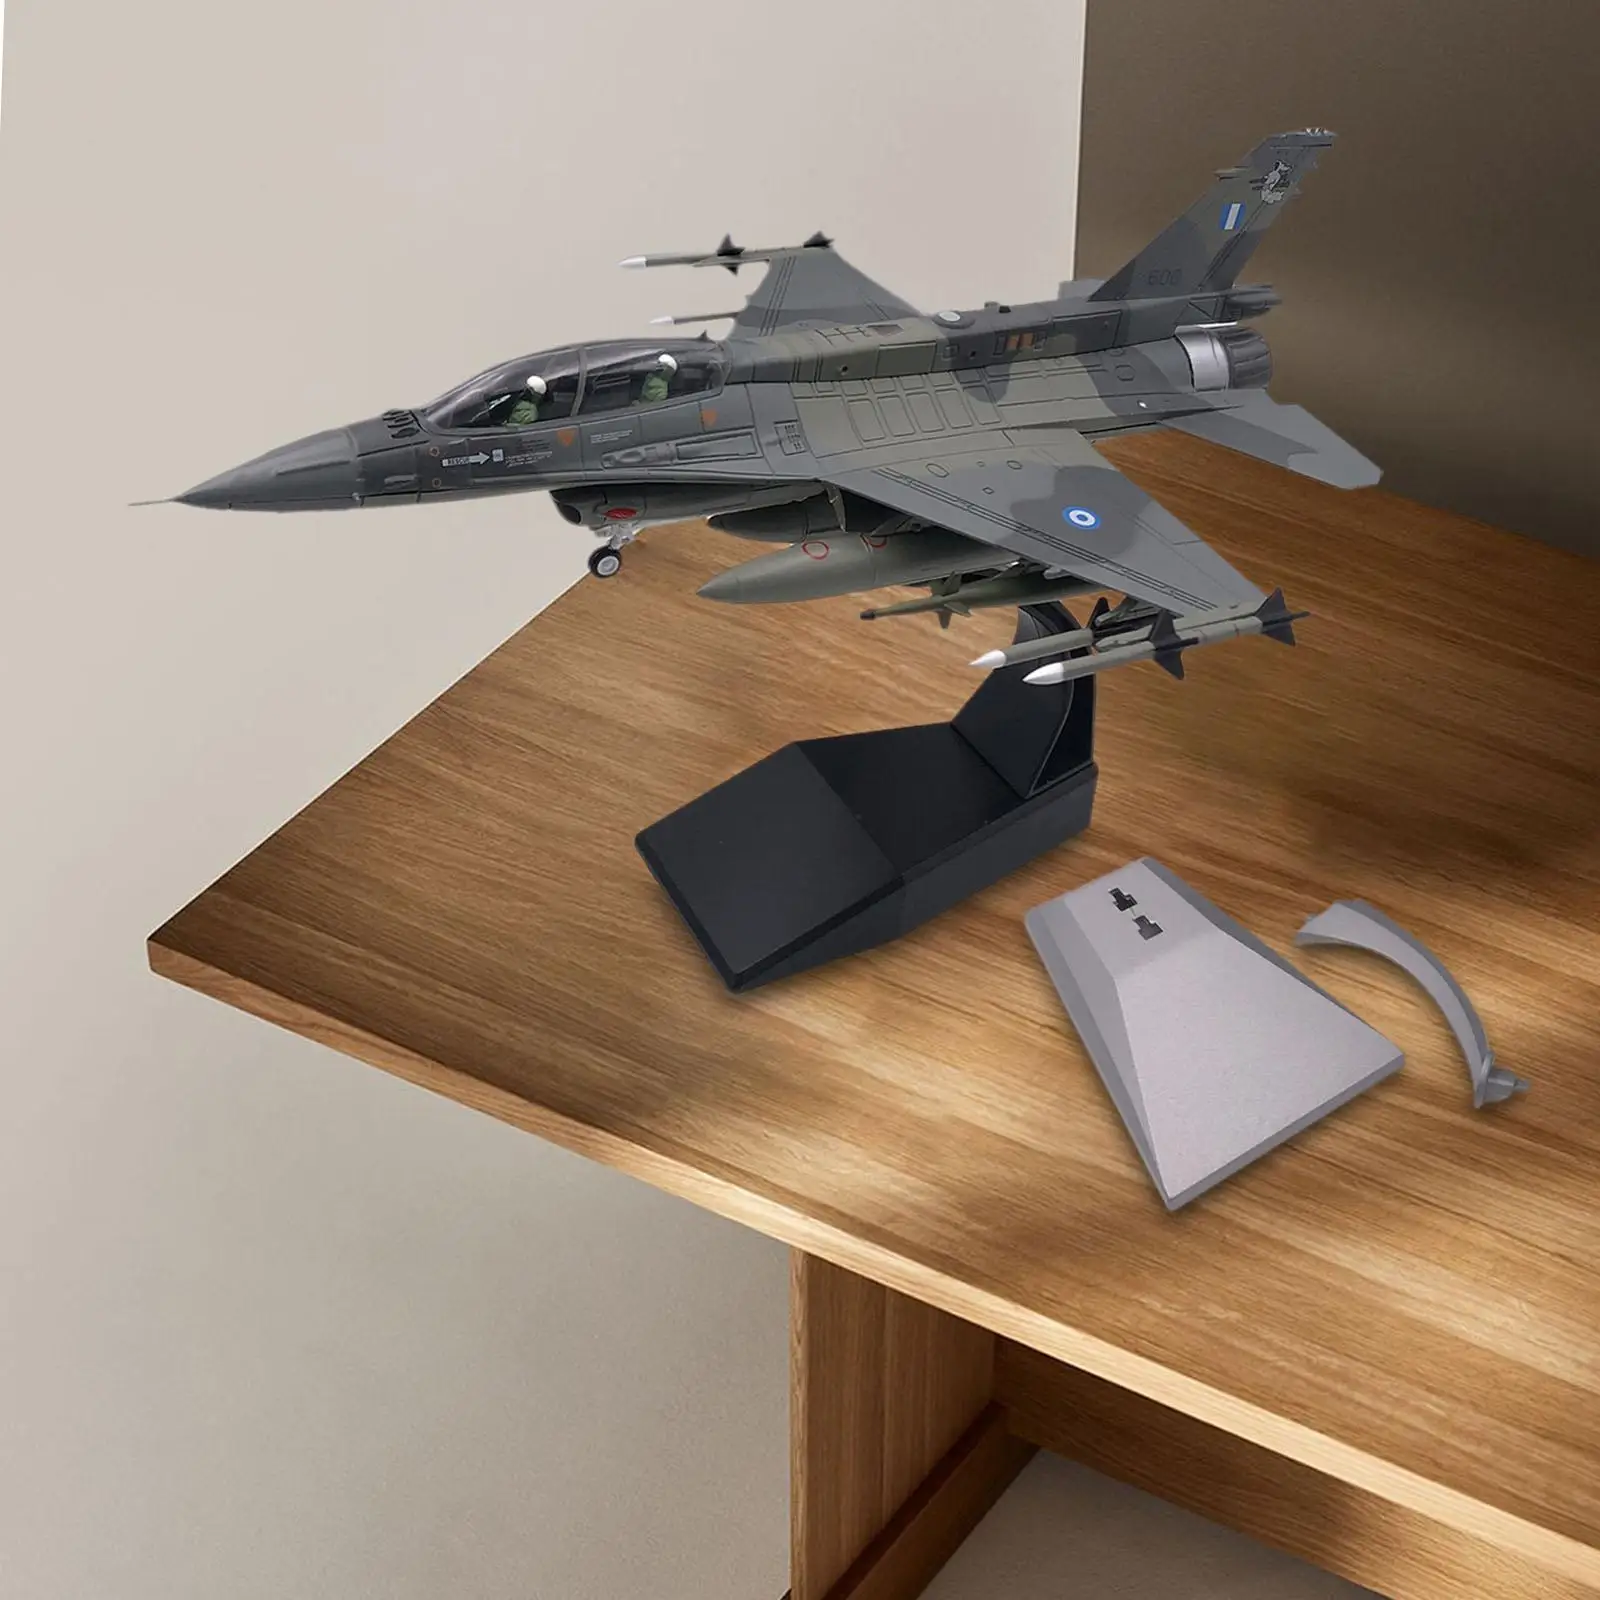 1/72 Scale F16D Fighter with Base Desktop Decoration Gift Aviation Commemorate Plane Model for Home Bedroom Office Shelf Bar